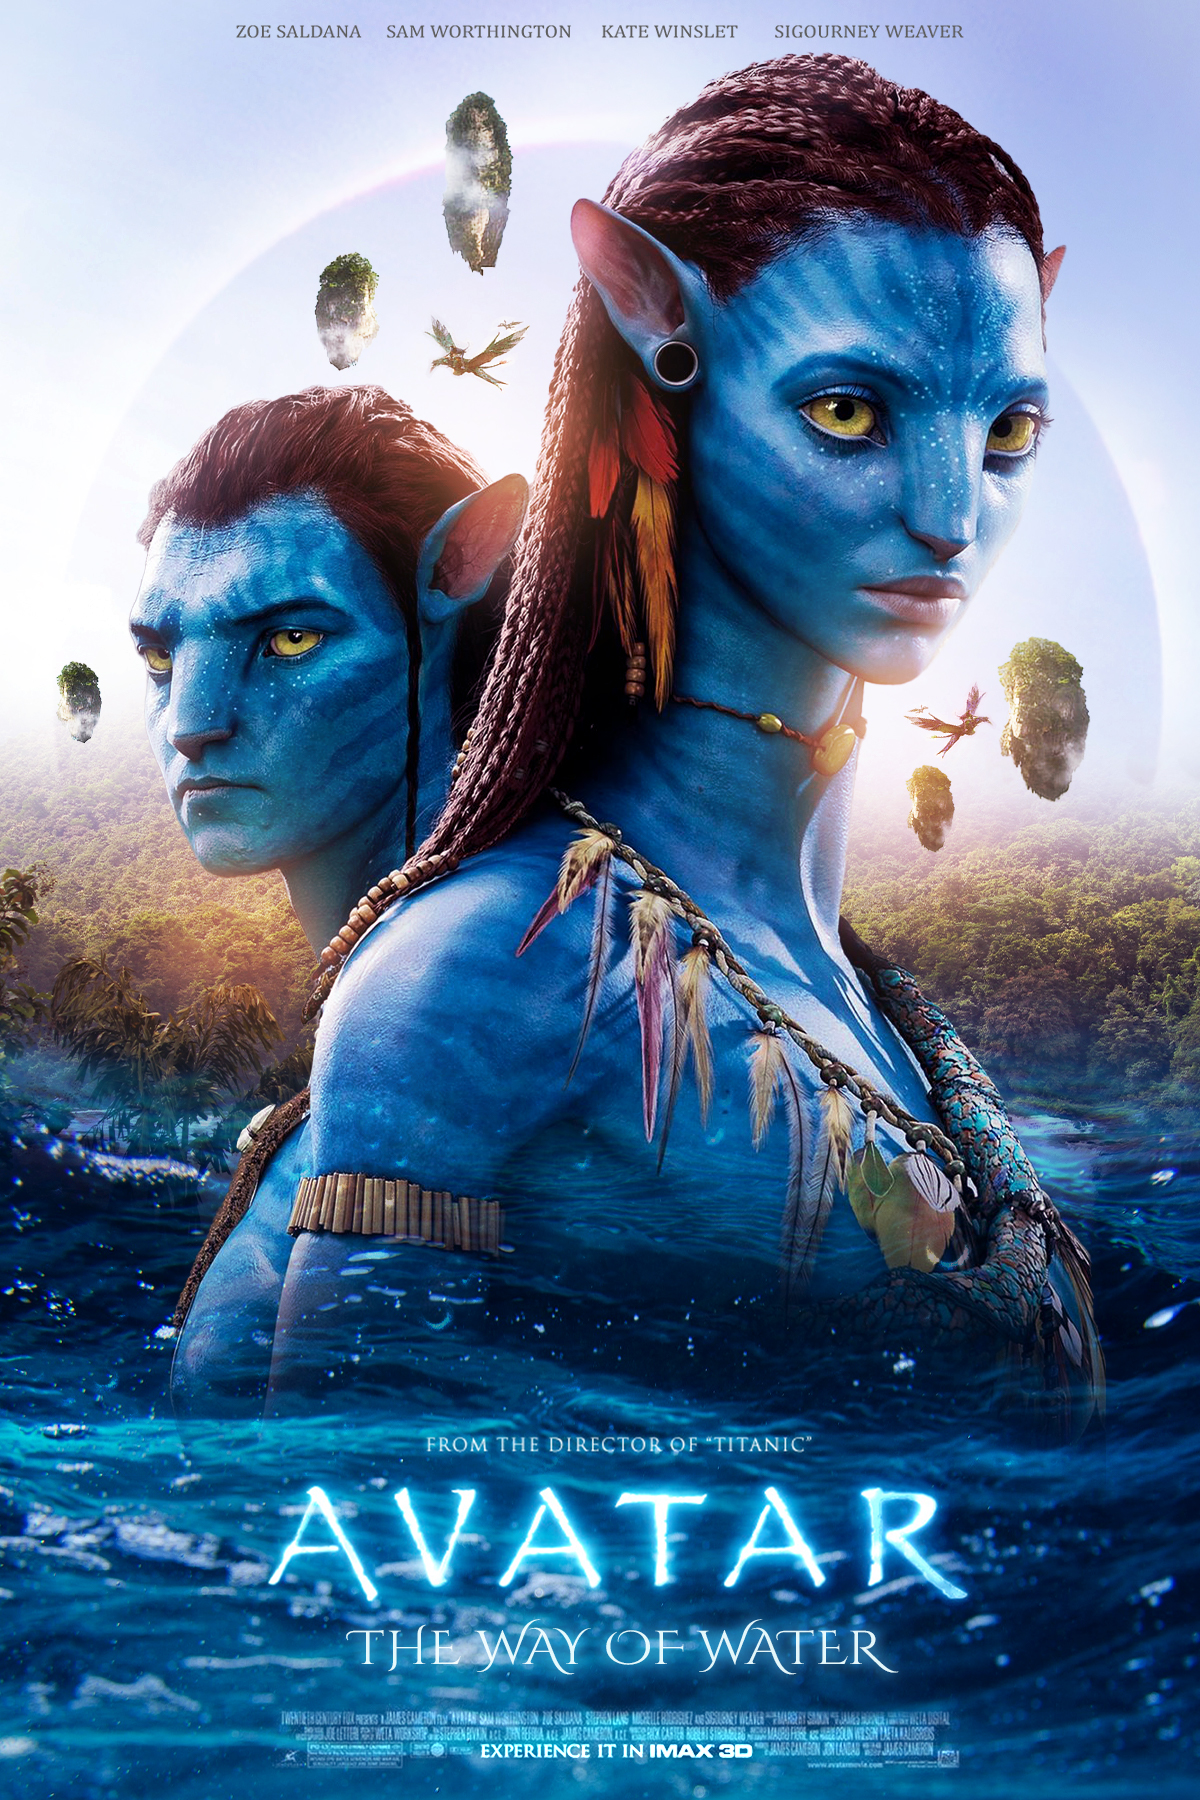 Avatar (2009) & Avatar: The Way of Water (2022), on Disney+ & IMAX